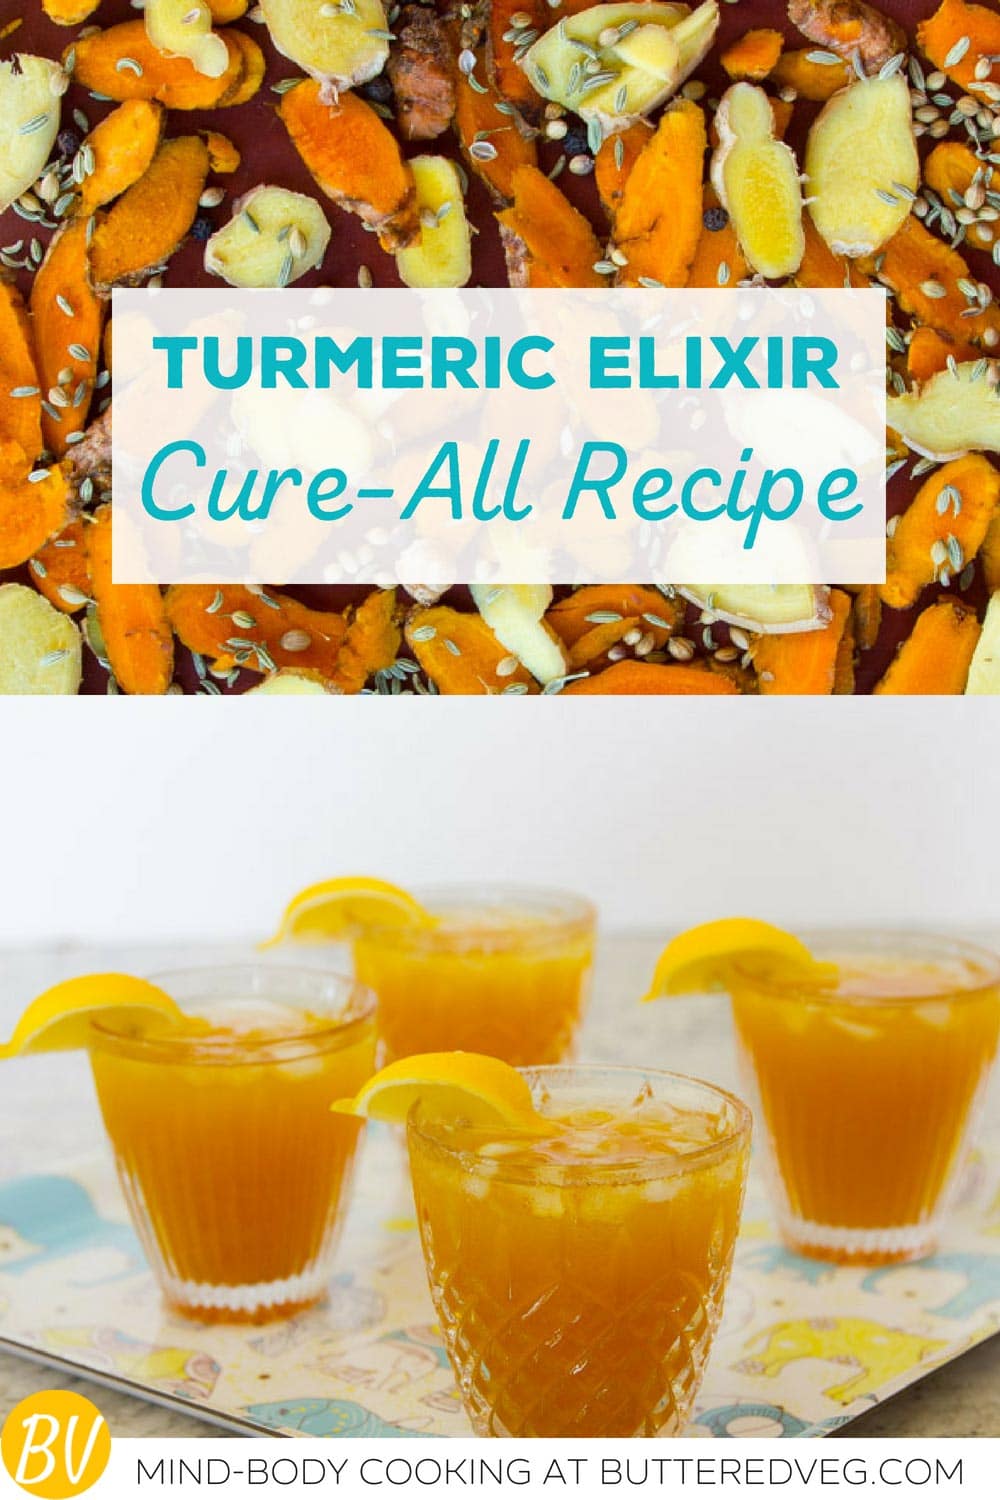 Turmeric Elixir ‘Cure-All’ Recipe